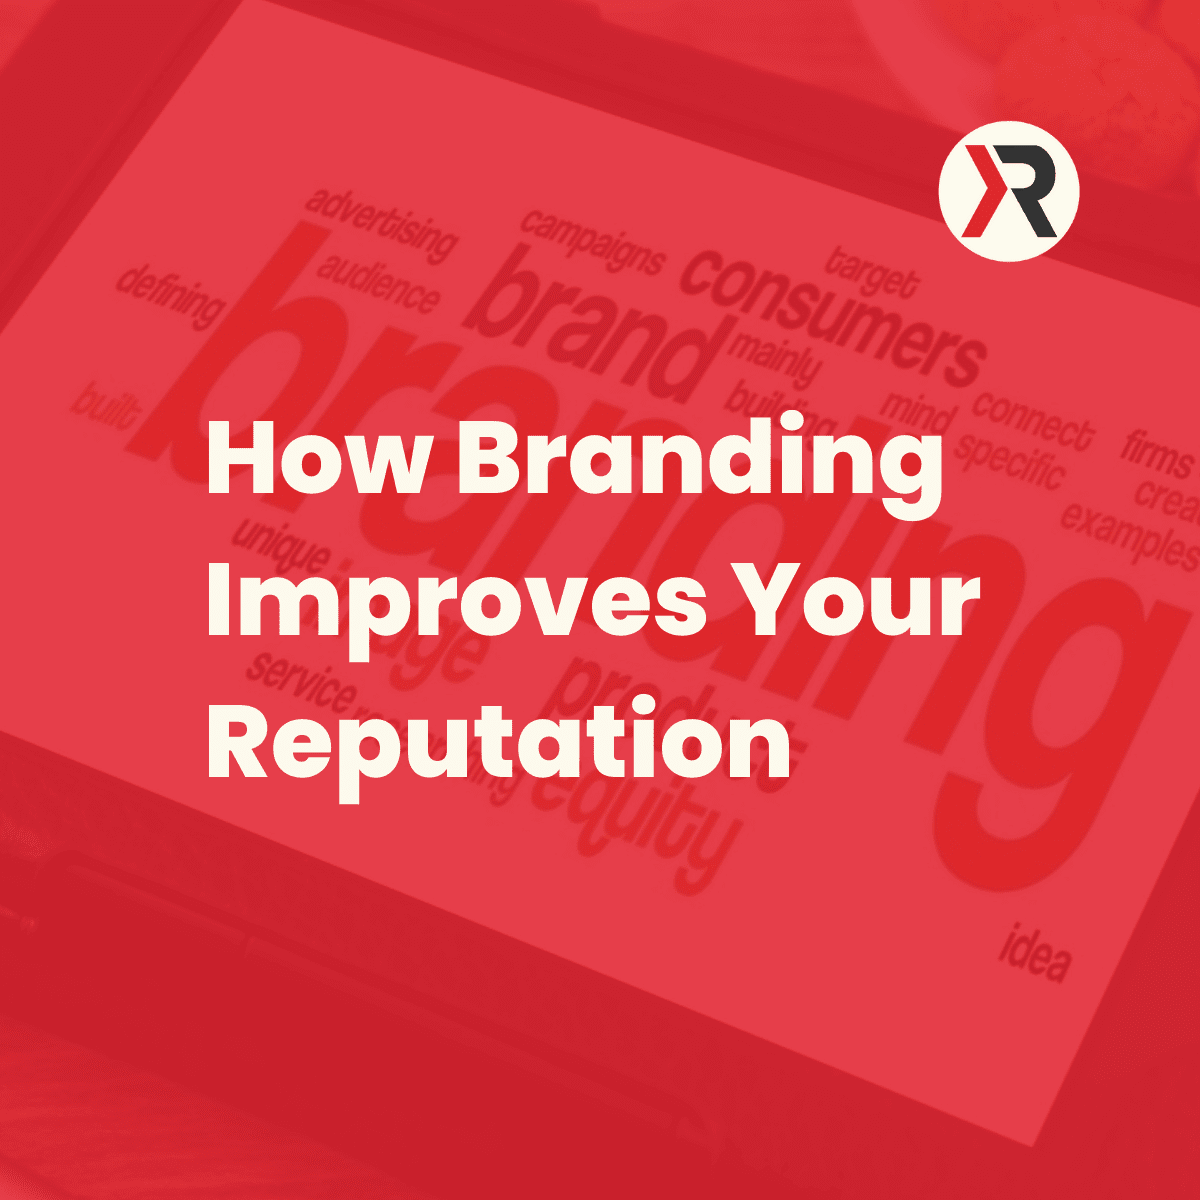 How Branding Improves Your Reputation